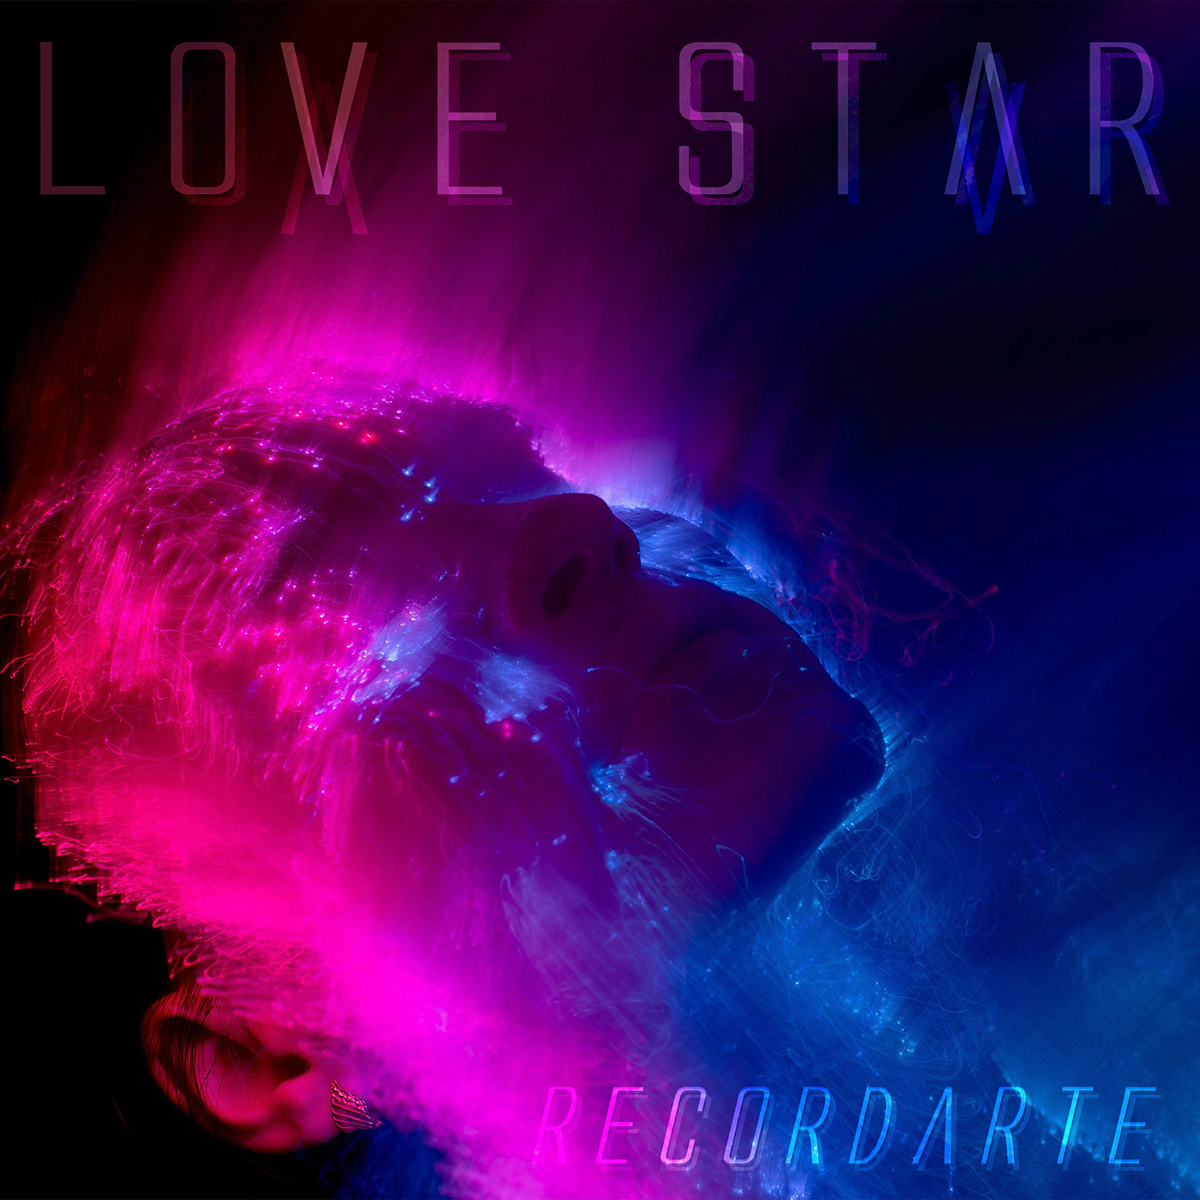 Love star new single cover recordarte